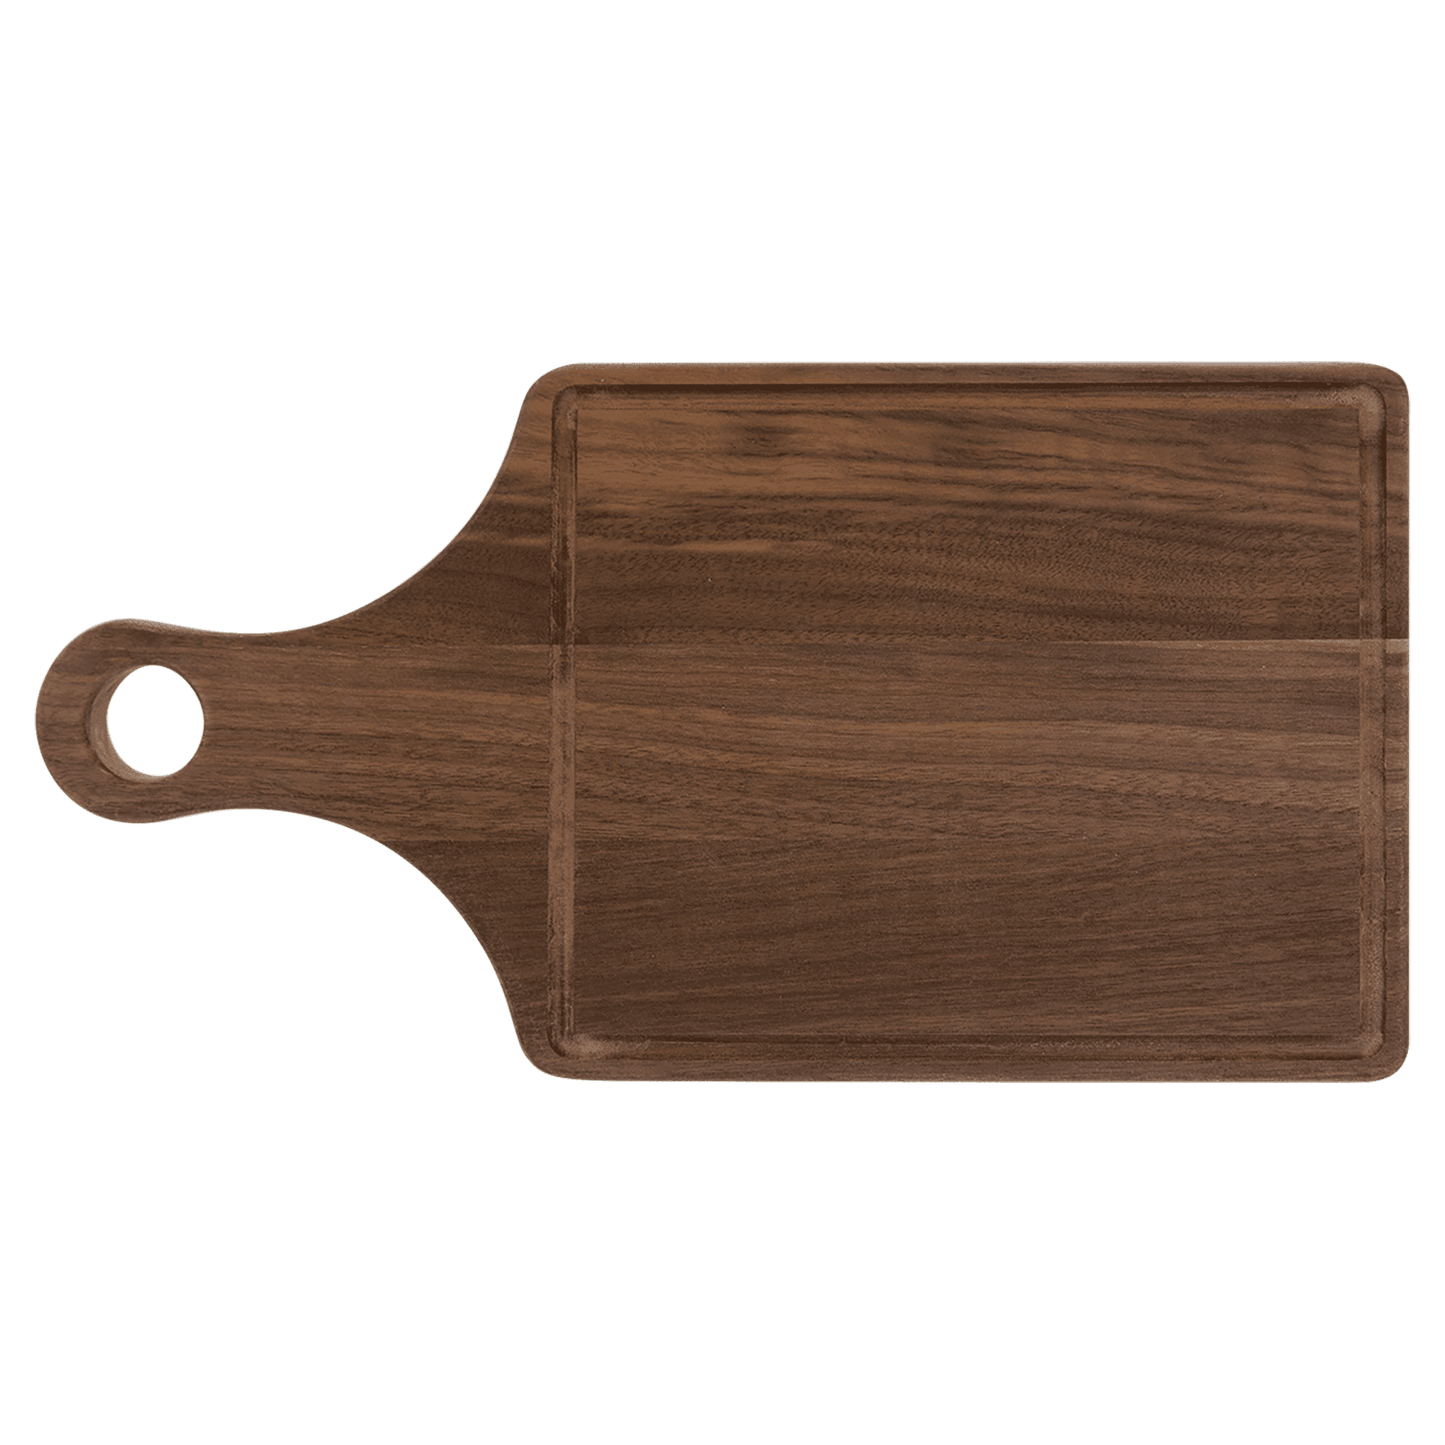 Walnut Paddle Shape Cutting Board with Drip Ring - 13 1/2" x 7"